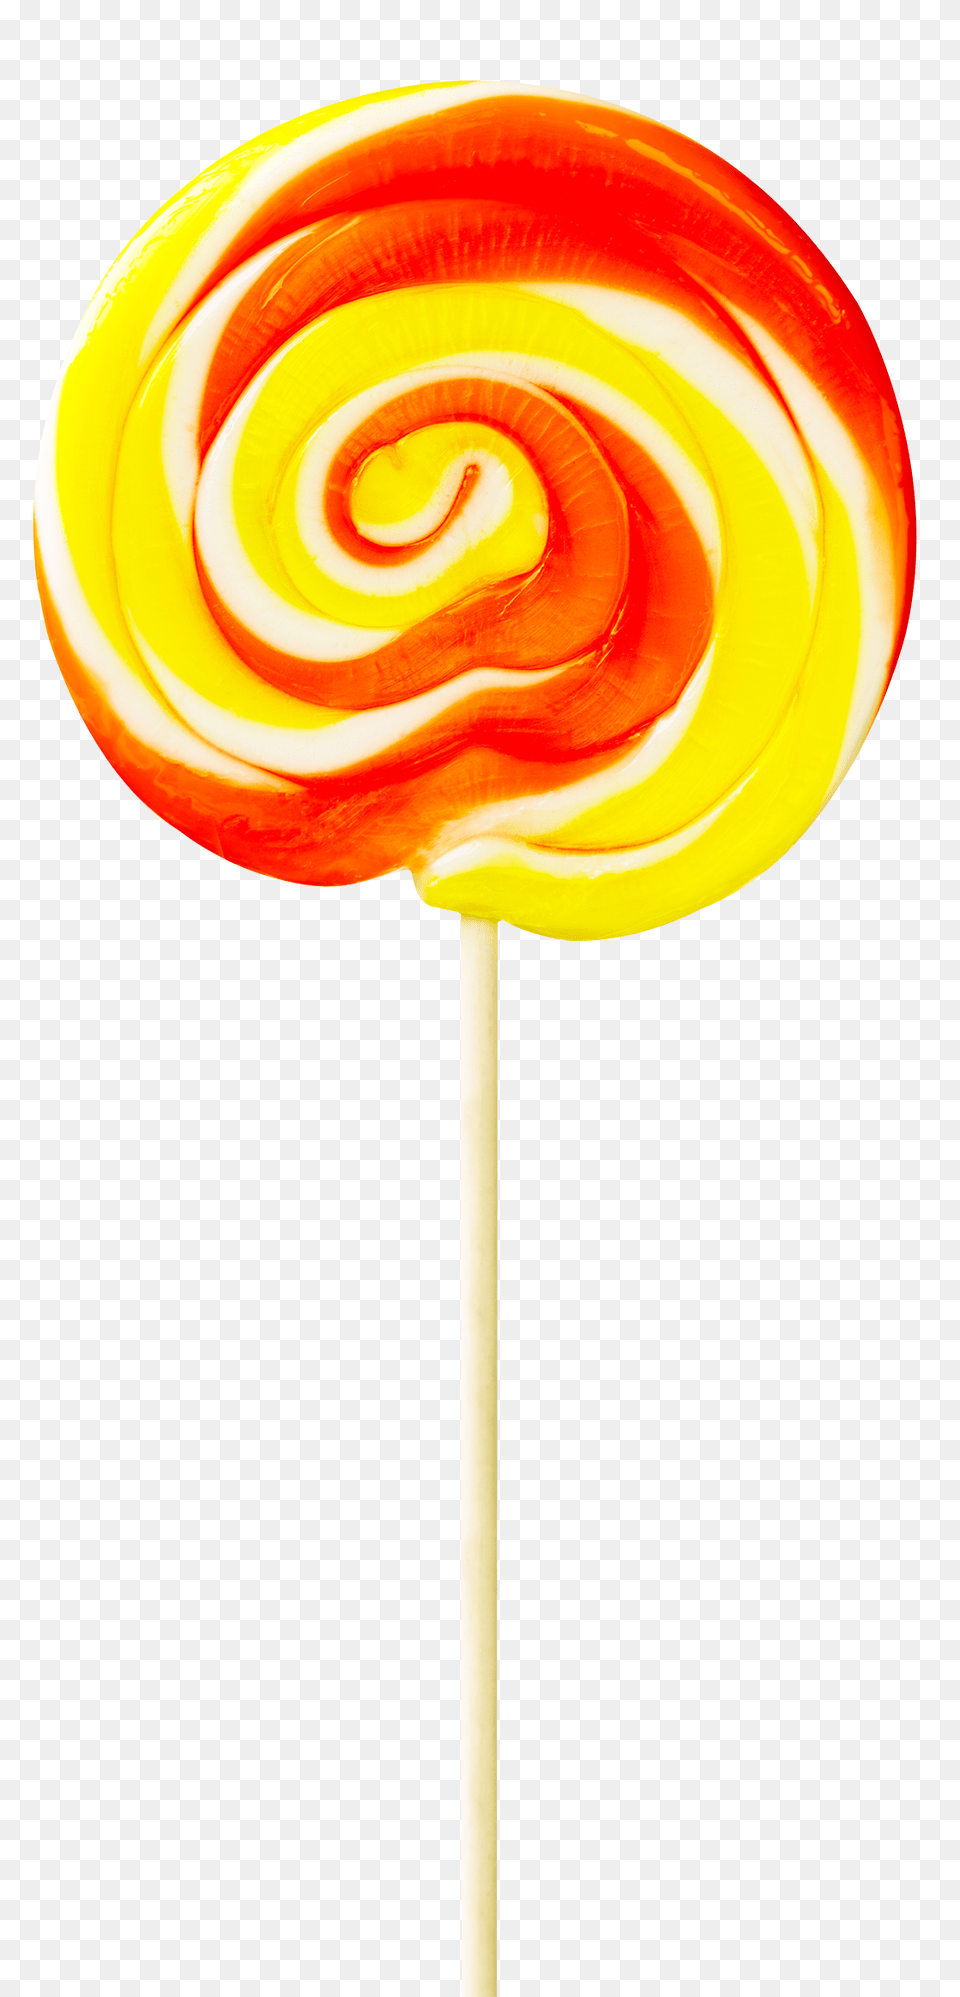 Pngpix Com Lollipop Candy, Food, Sweets Free Transparent Png